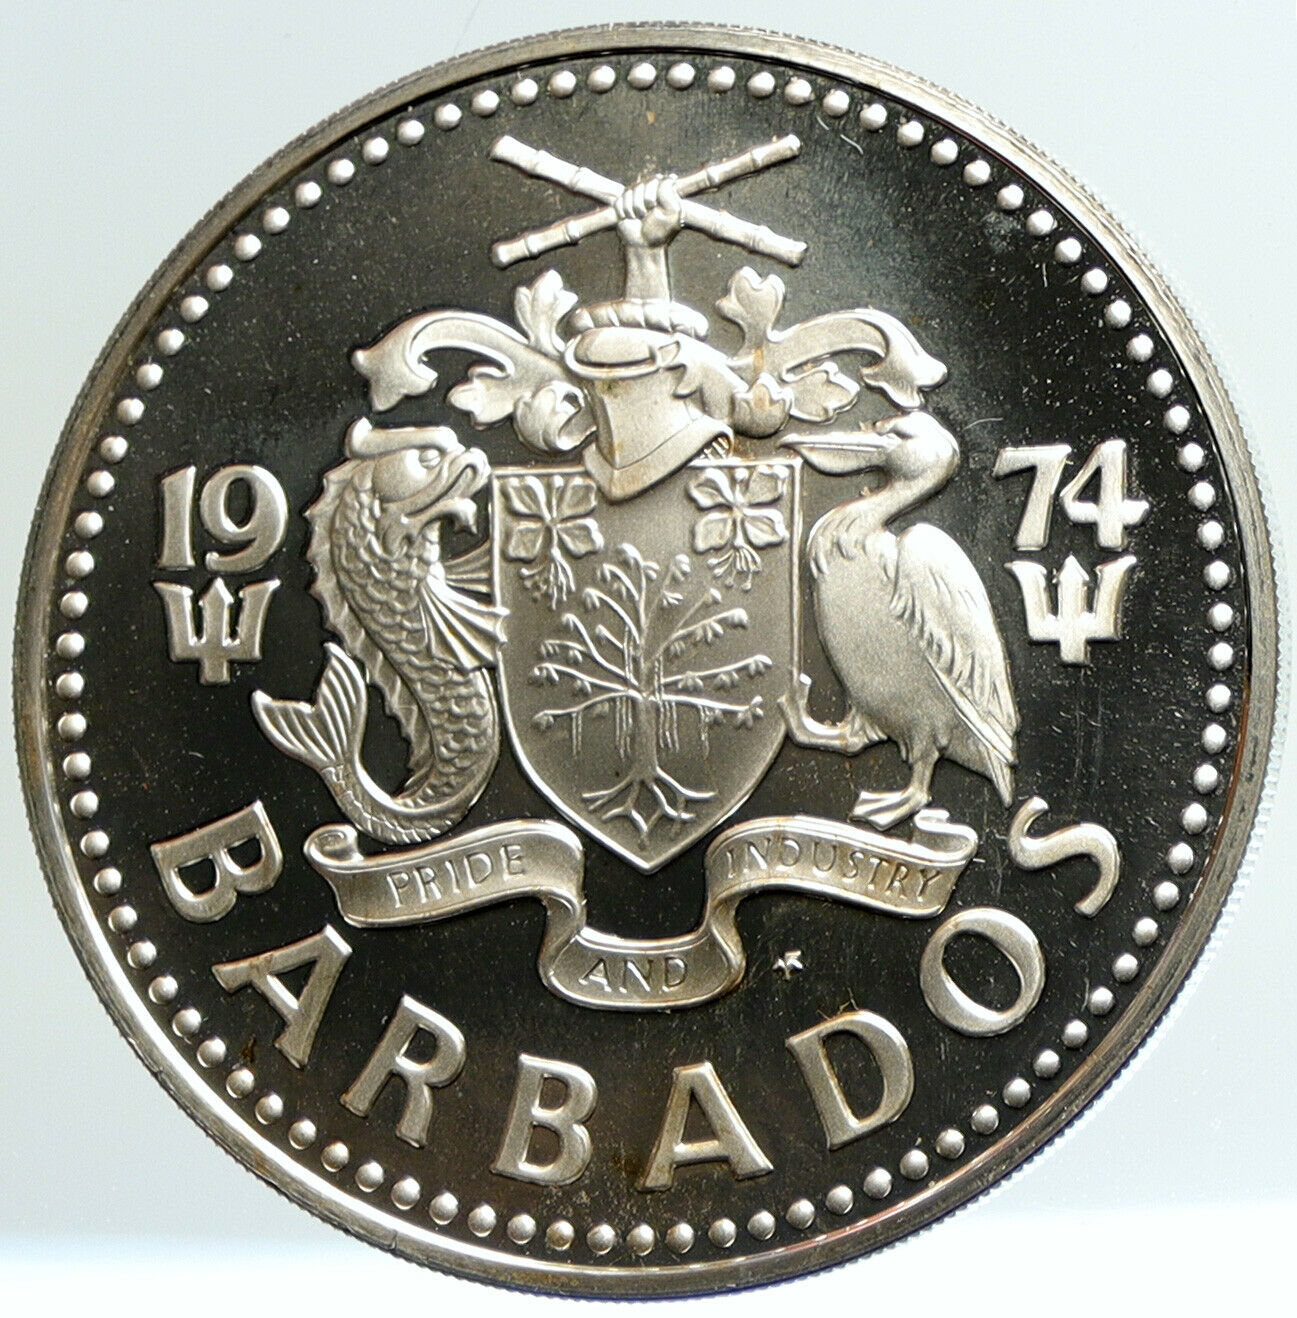 1974 BARBADOS Arms Trafalgar Fountain OLD Proof Silver 5 Dollars Coin i101236